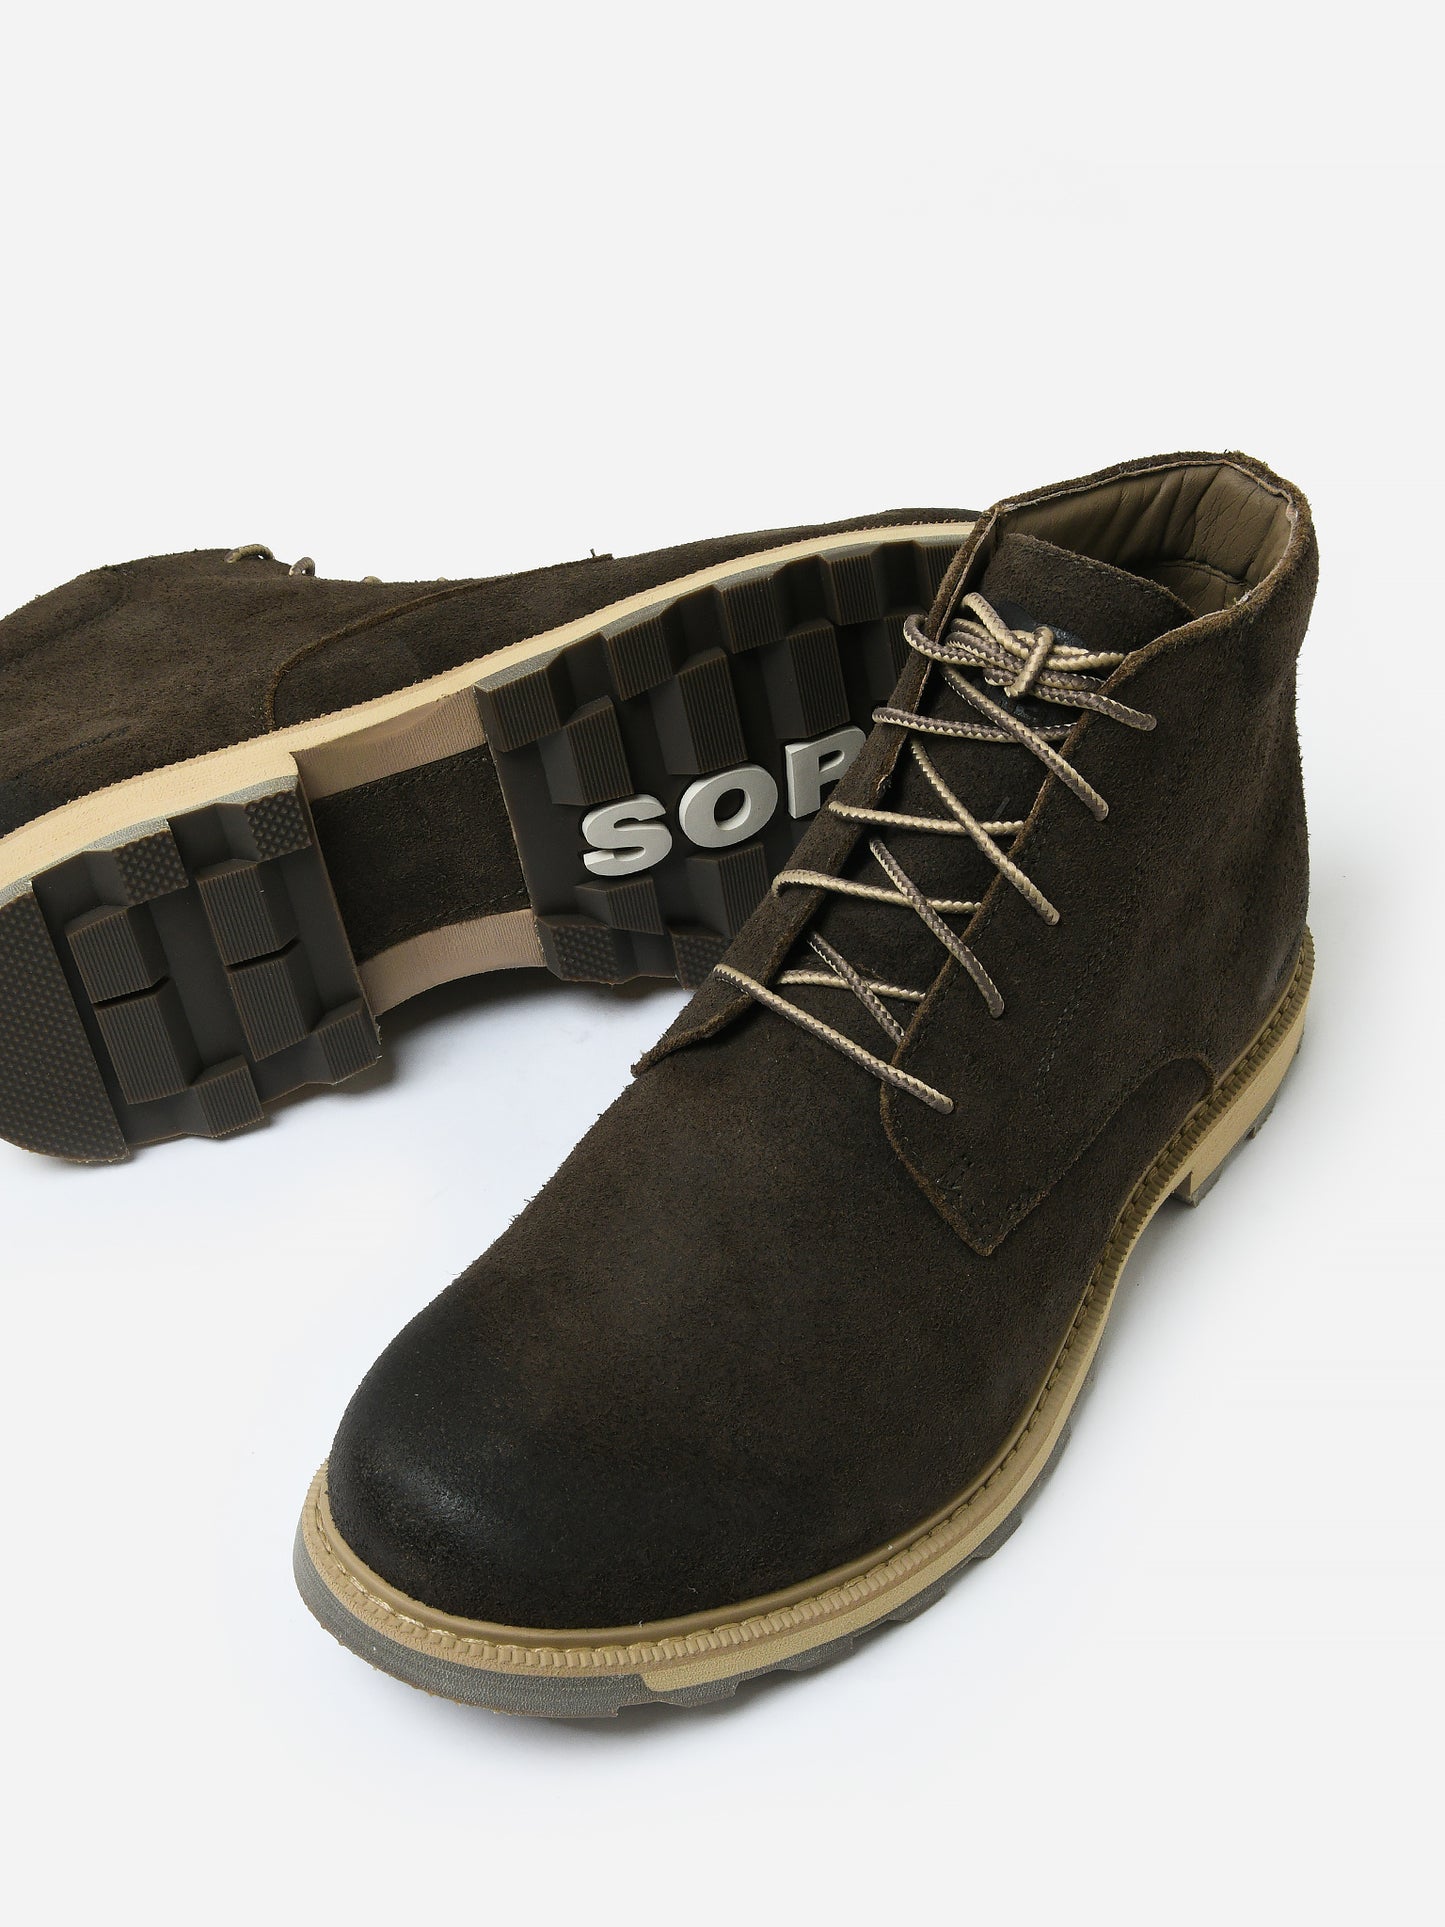 Sorel Men's Madson™ II Chukka Boot